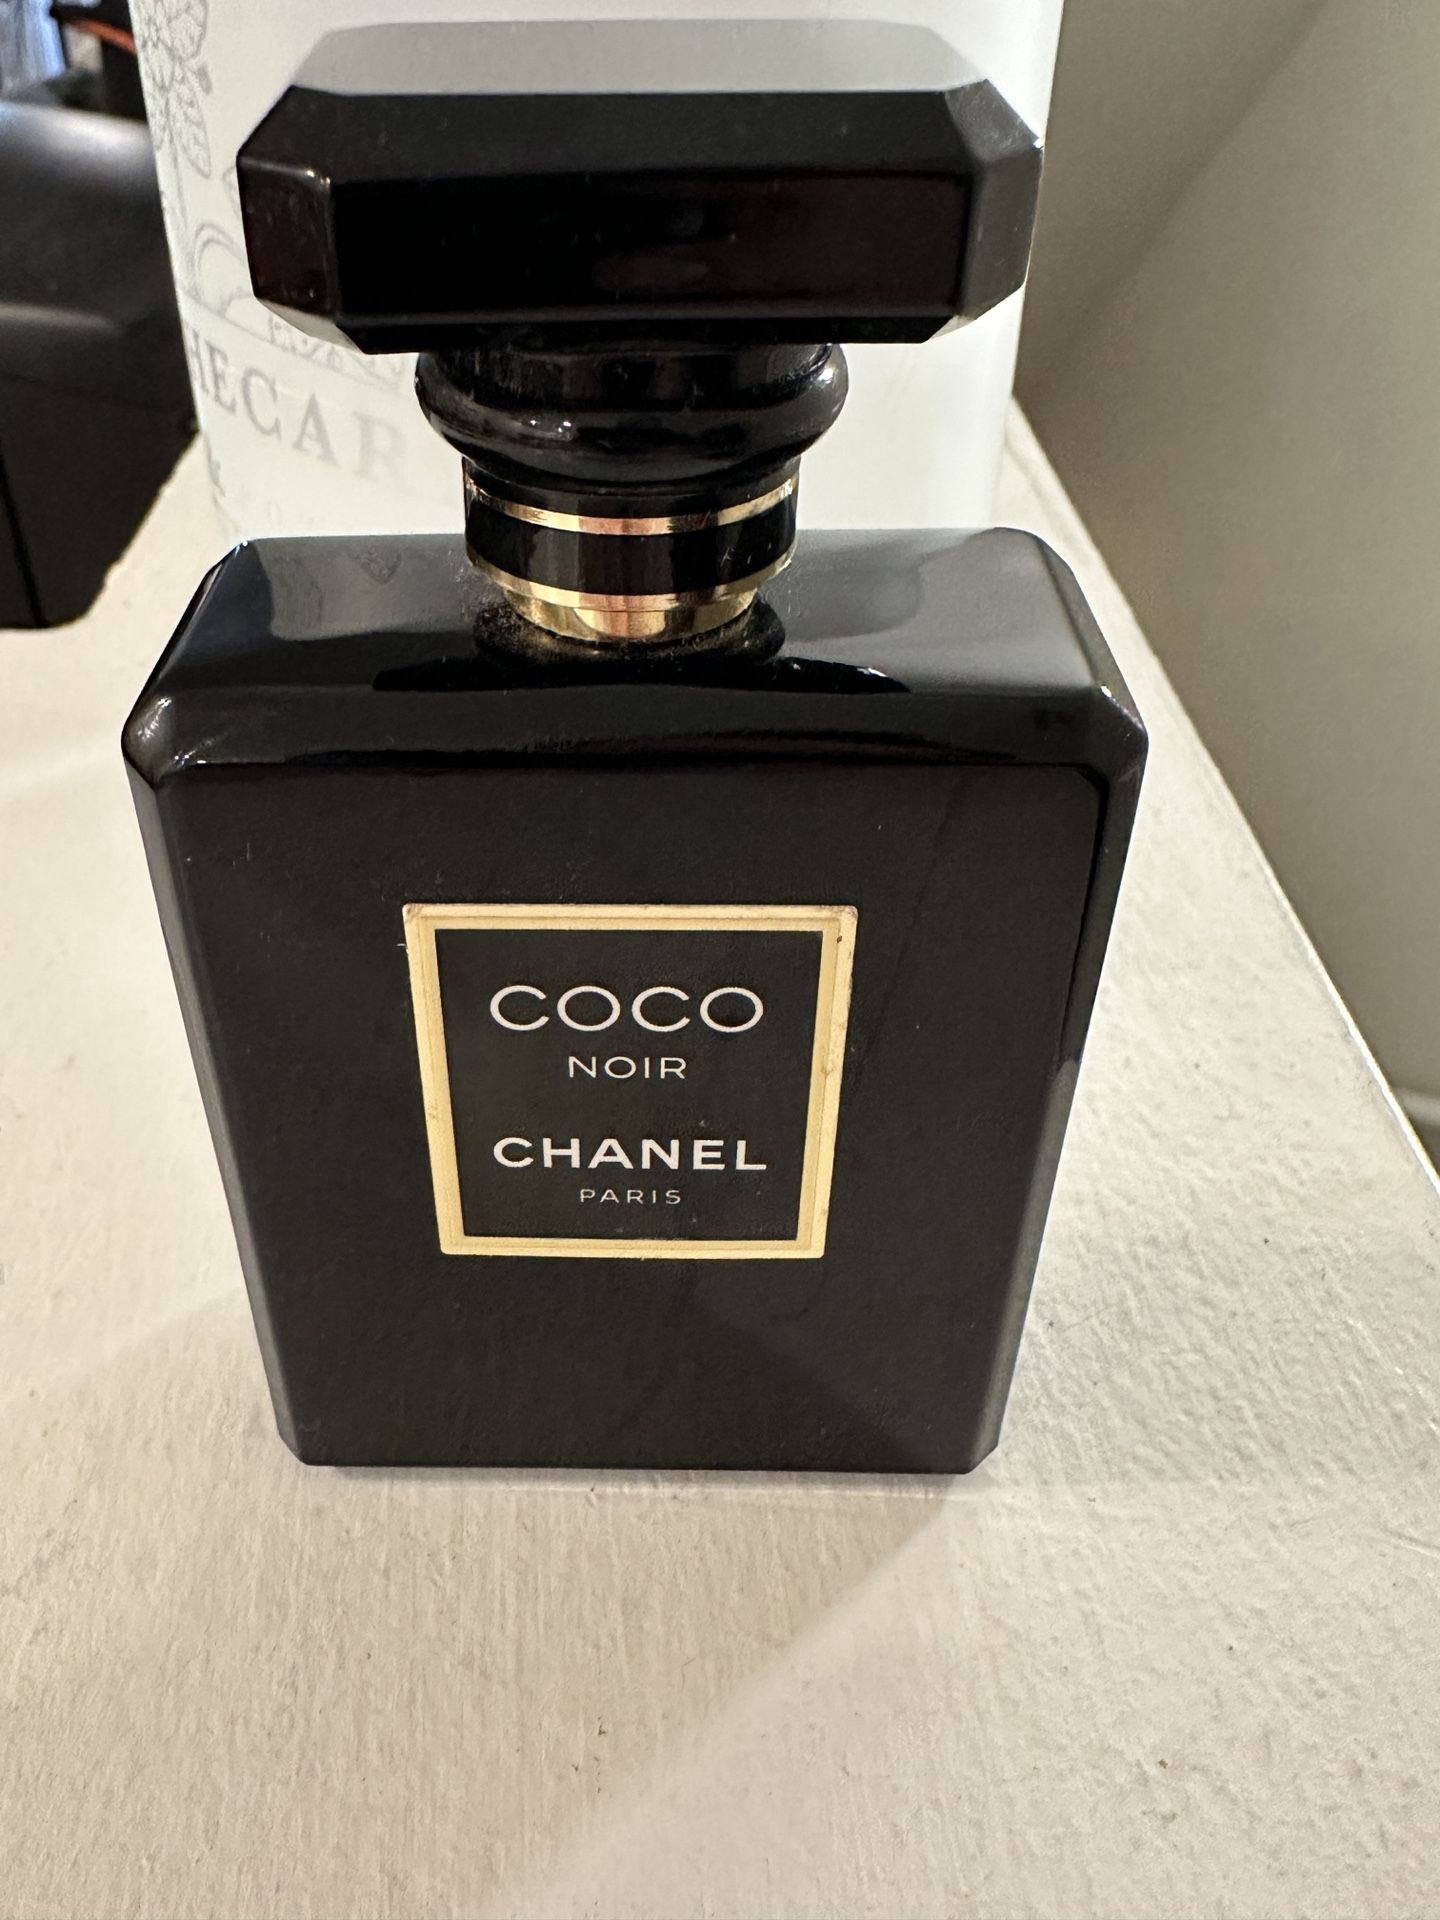 Chanel Coco Noir Perfume - 90% Full